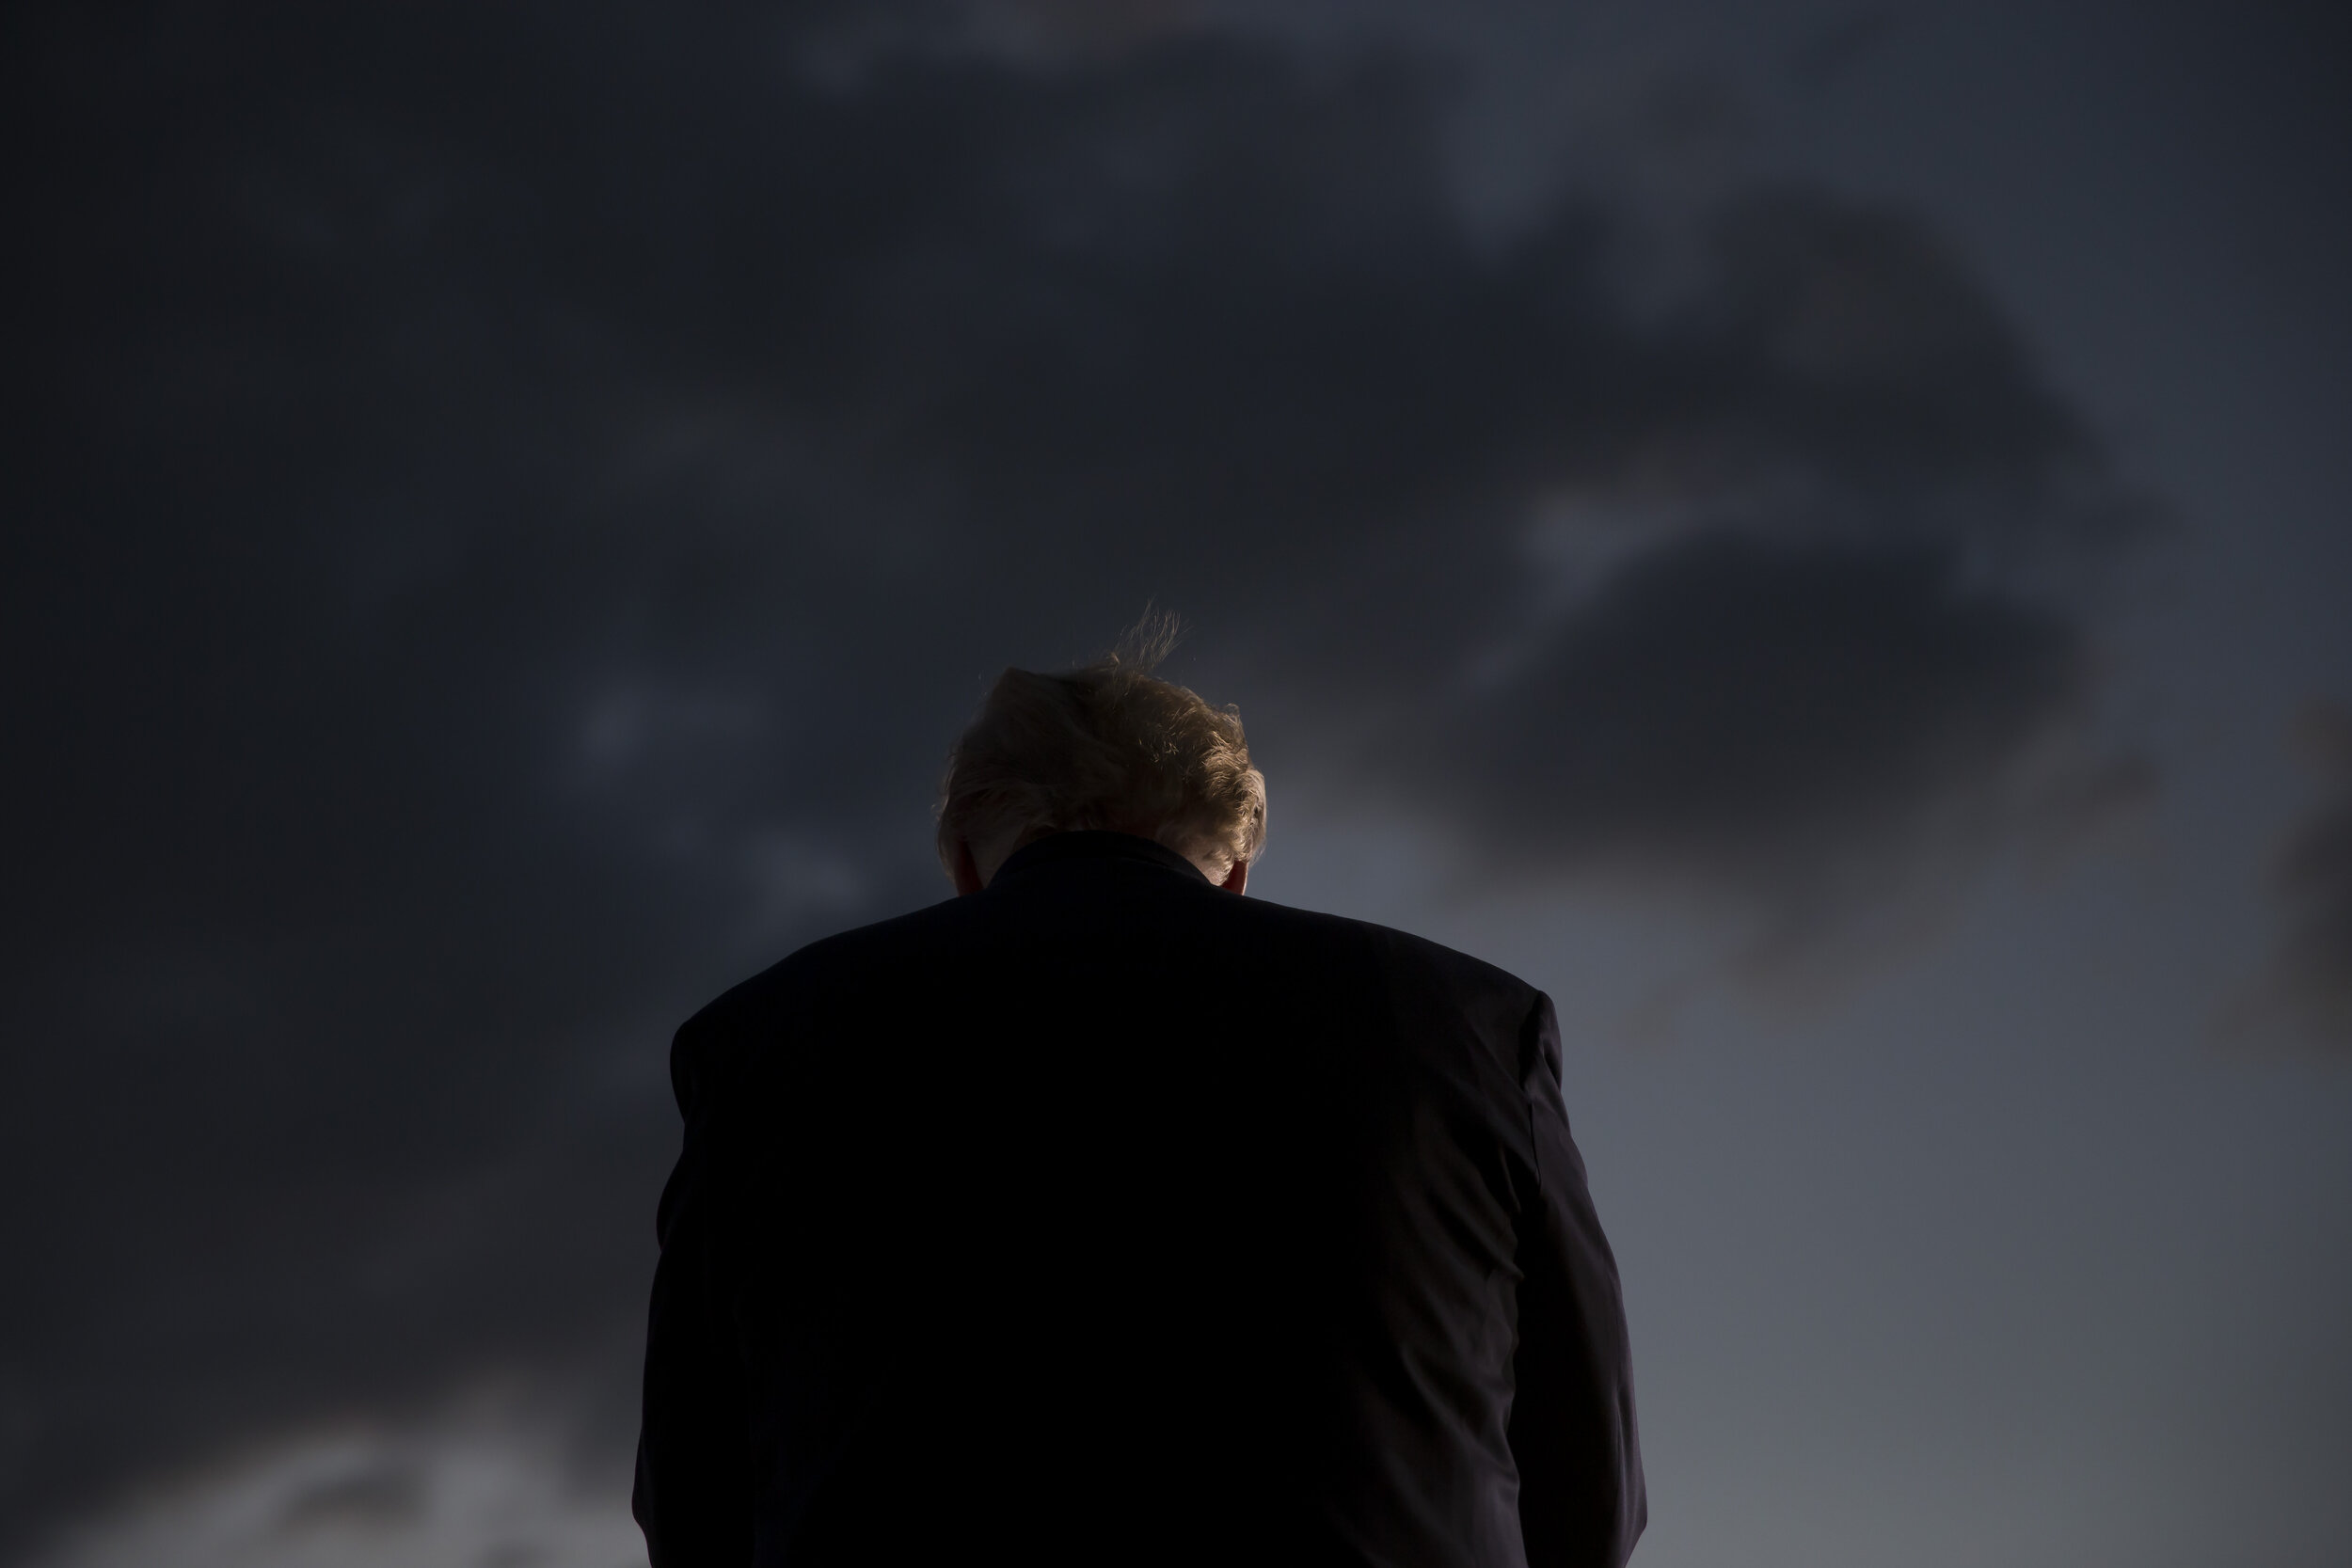   President Donald Trump, Montoursville, PA. 2019  